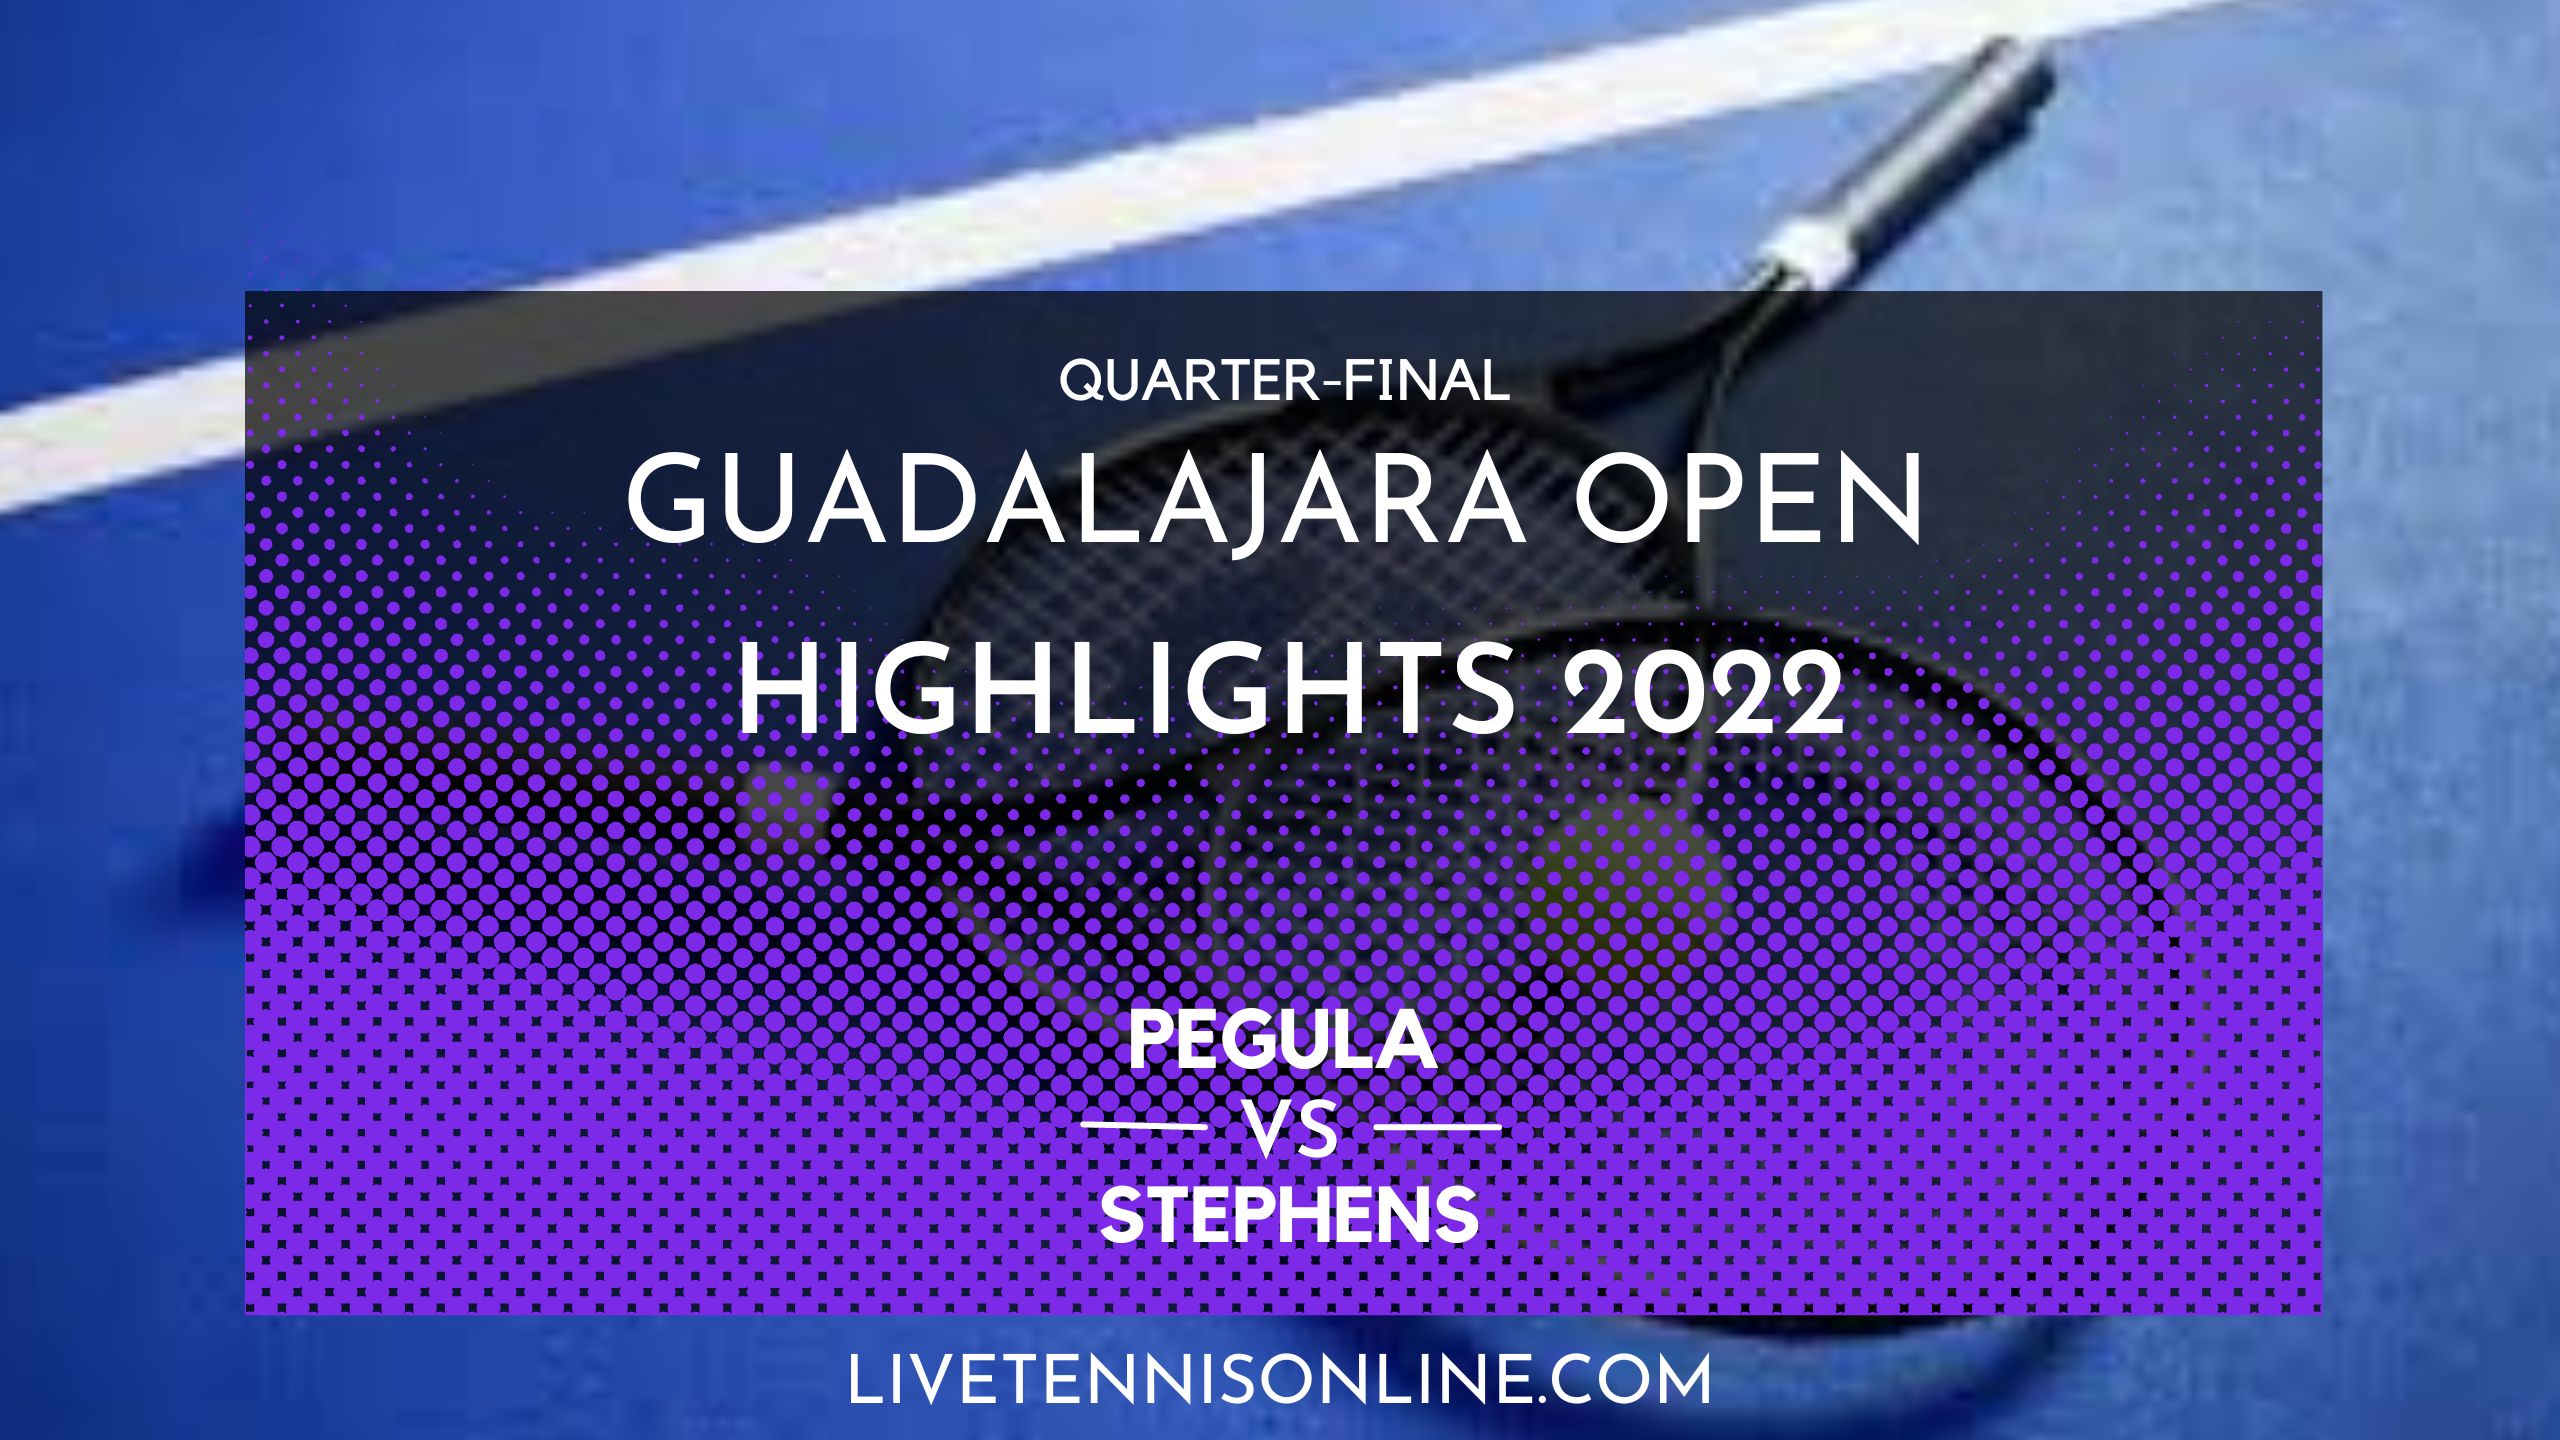 Pegula Vs Stephens QF Highlights 2022 Guadalajara Open